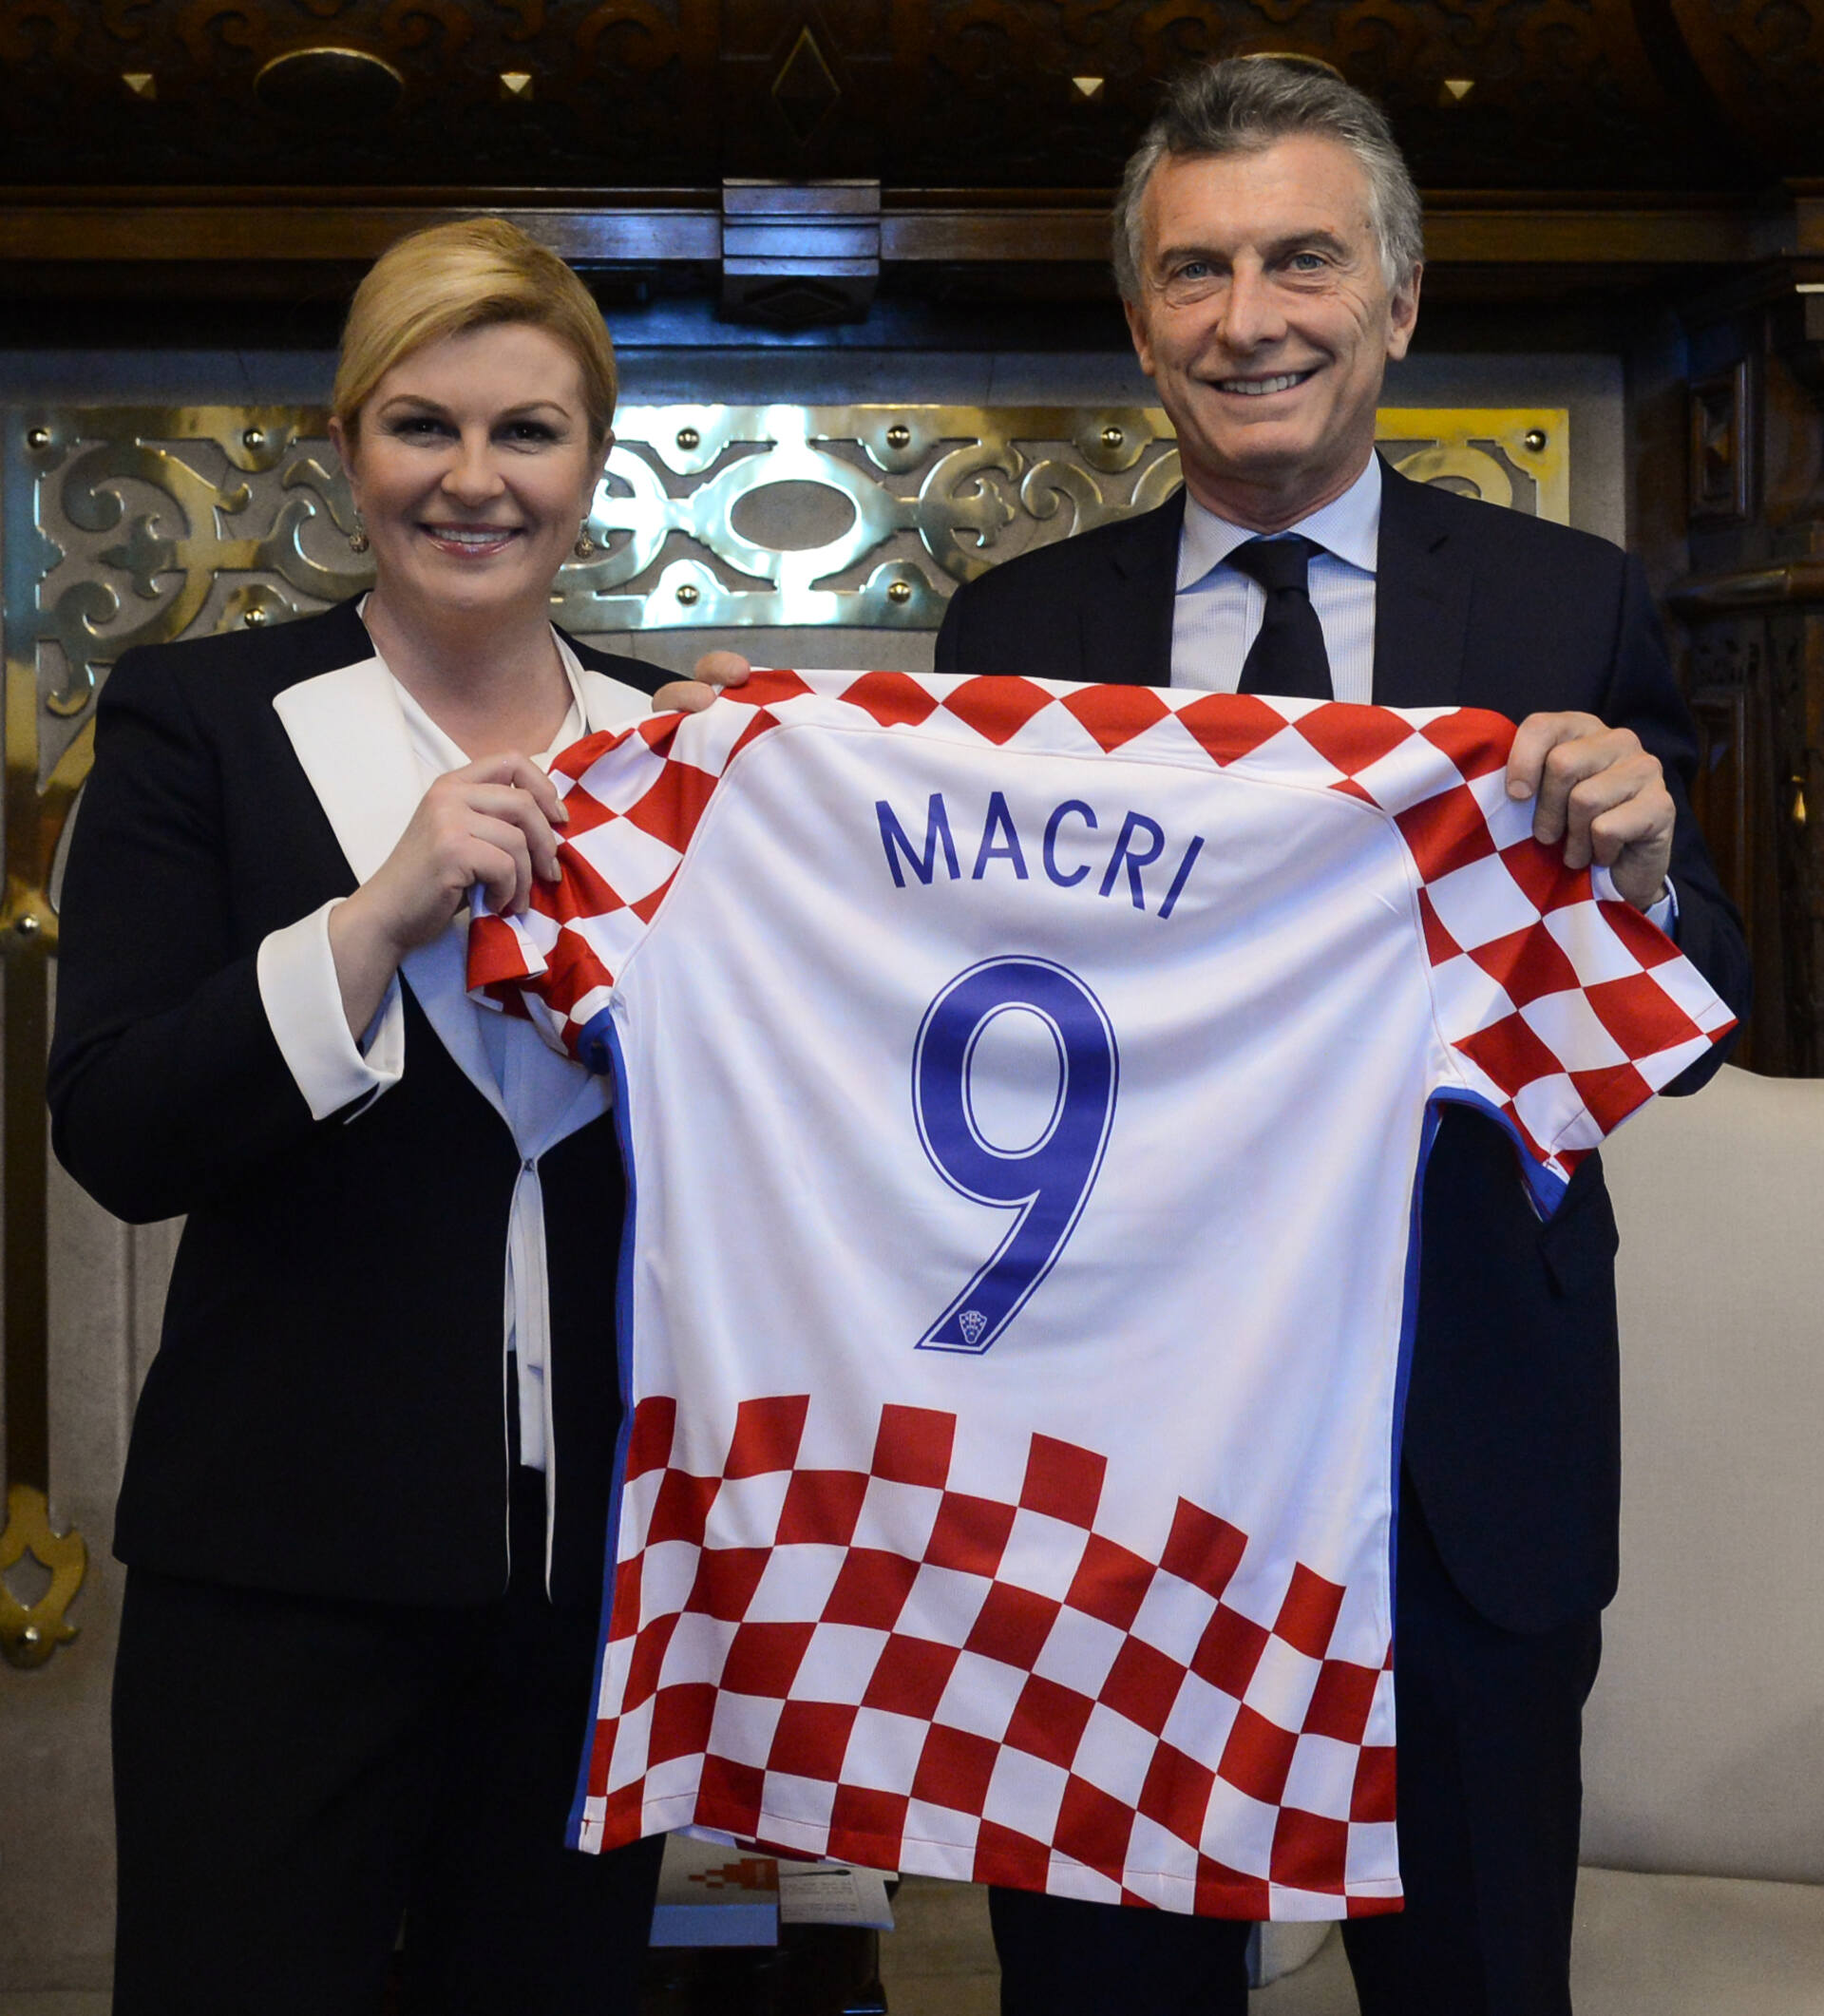 Macri recibió a la presidenta de Croacia